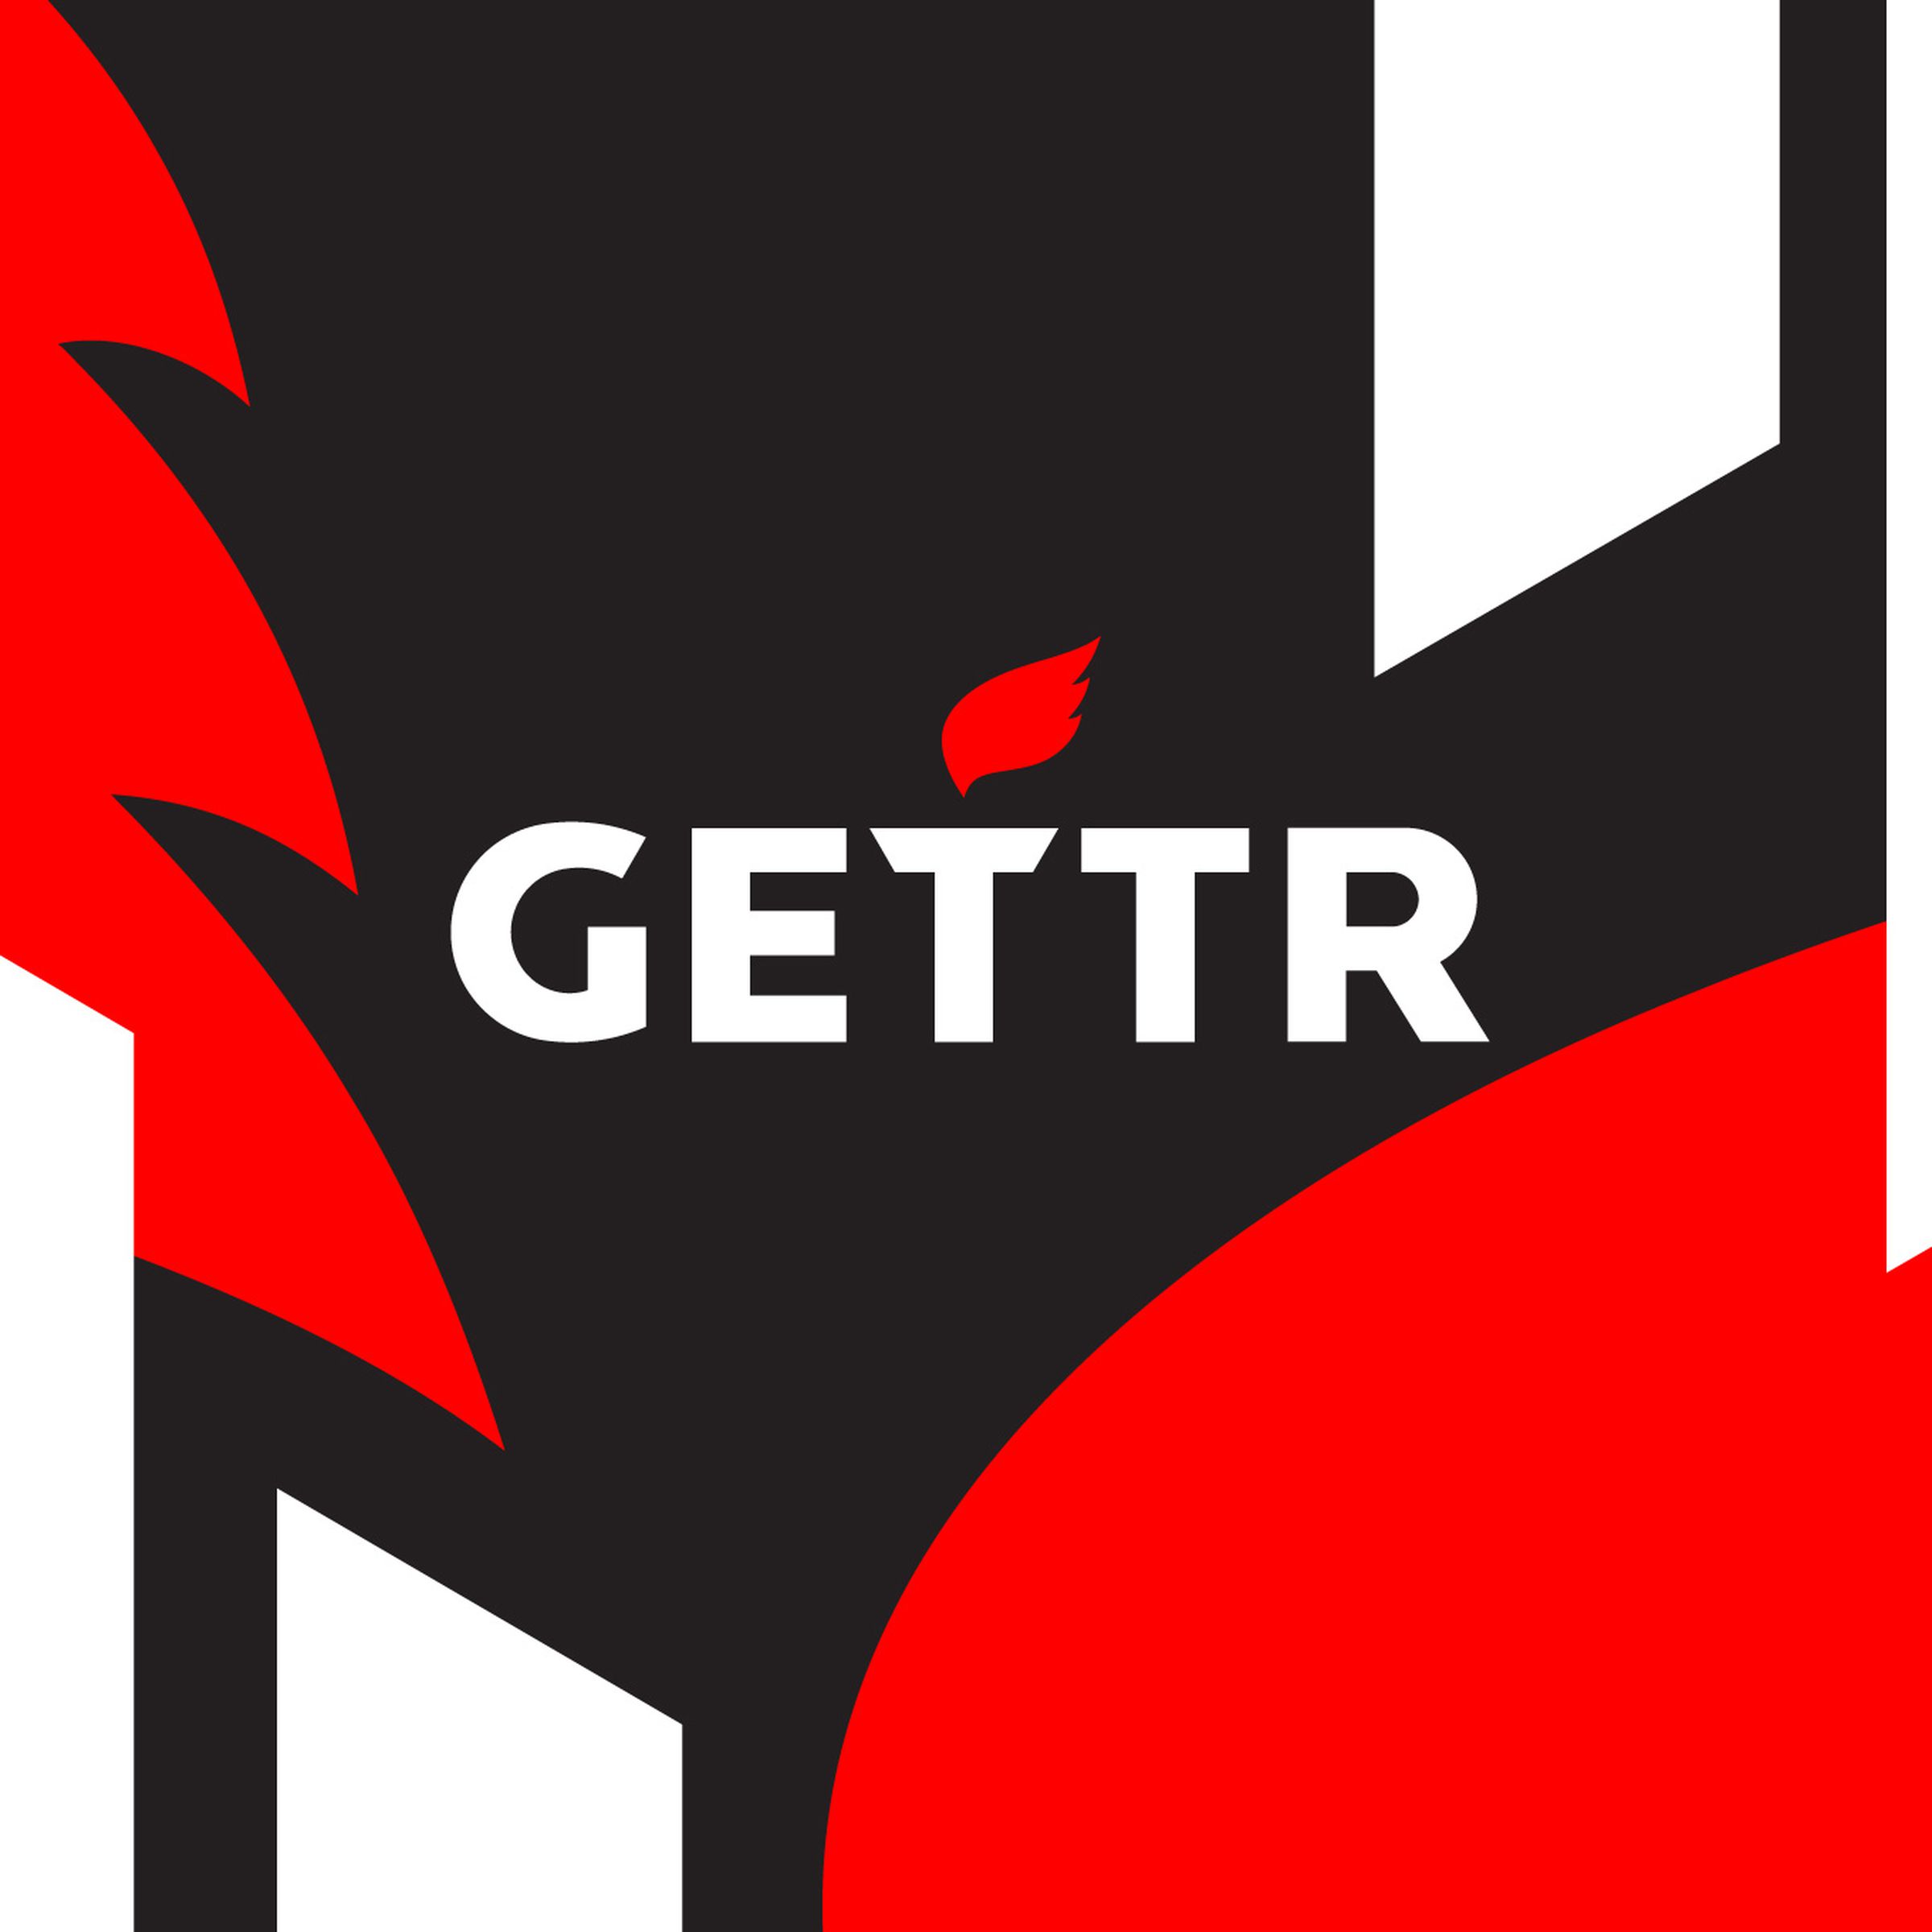 Gettr logo